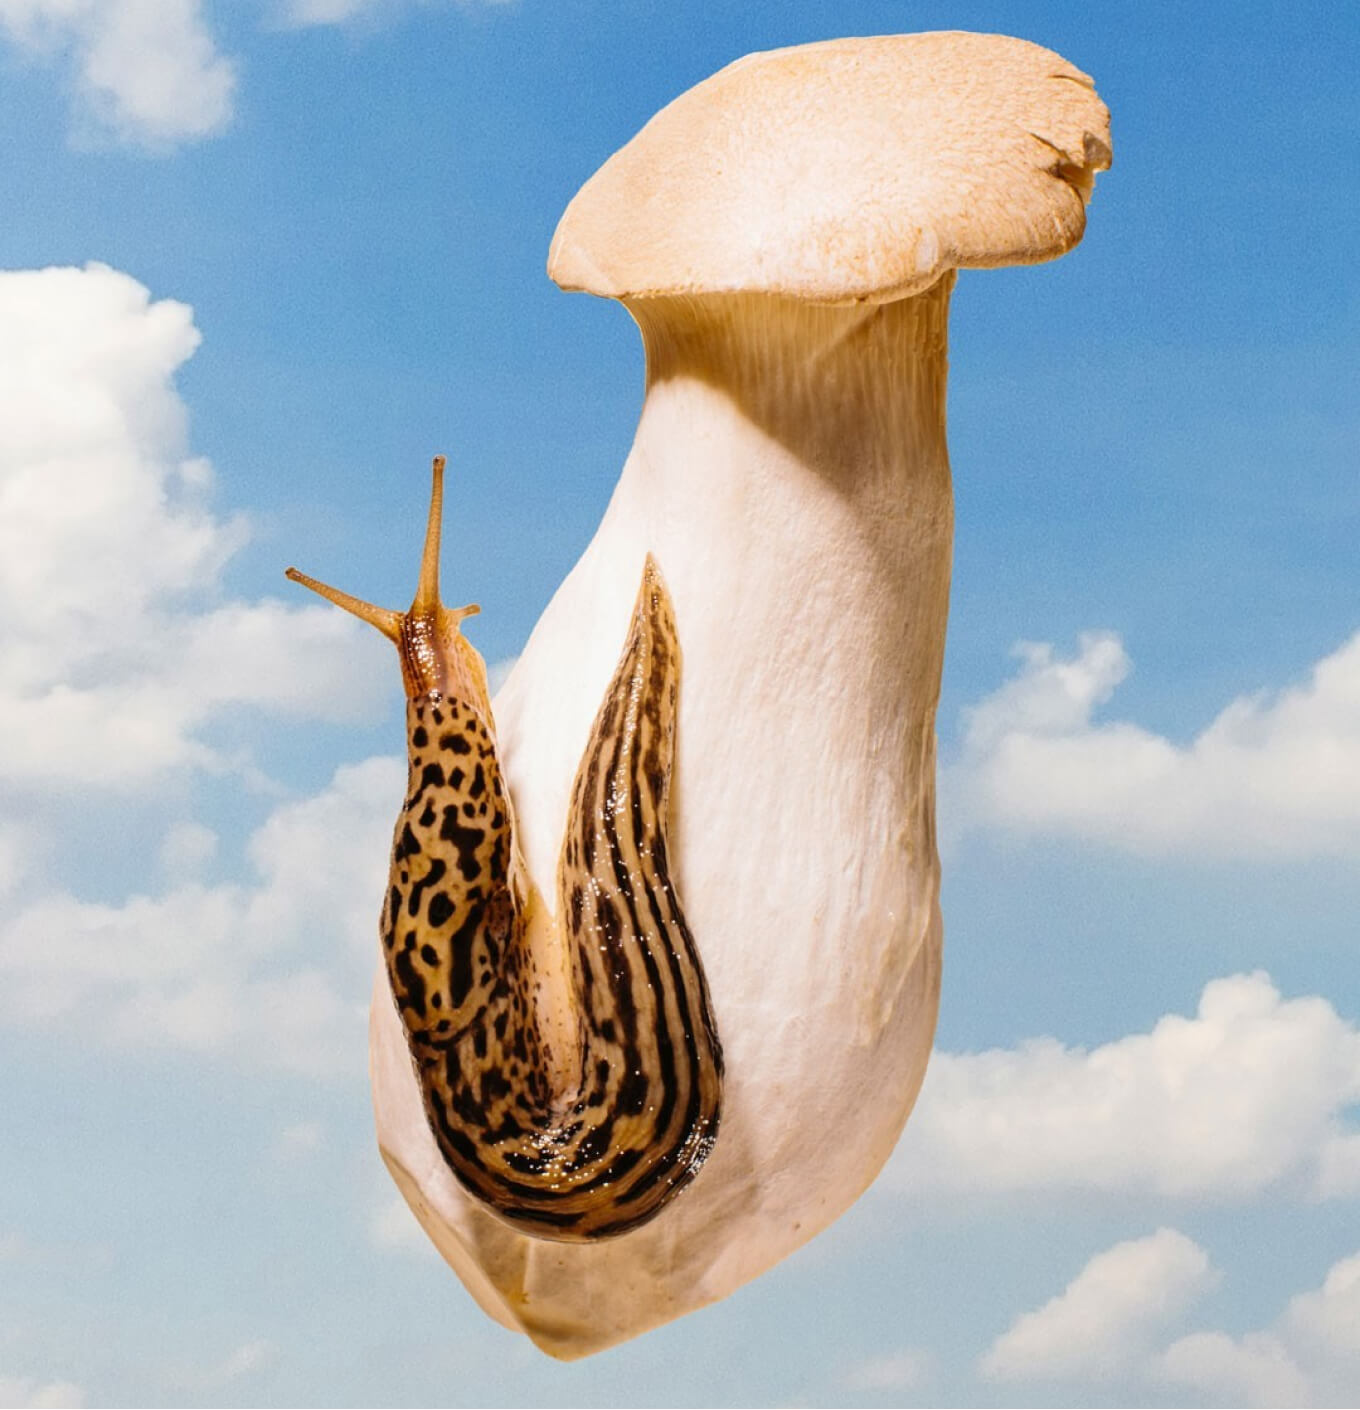 trumpet mushroom with a slug against a blue sky background (photo)